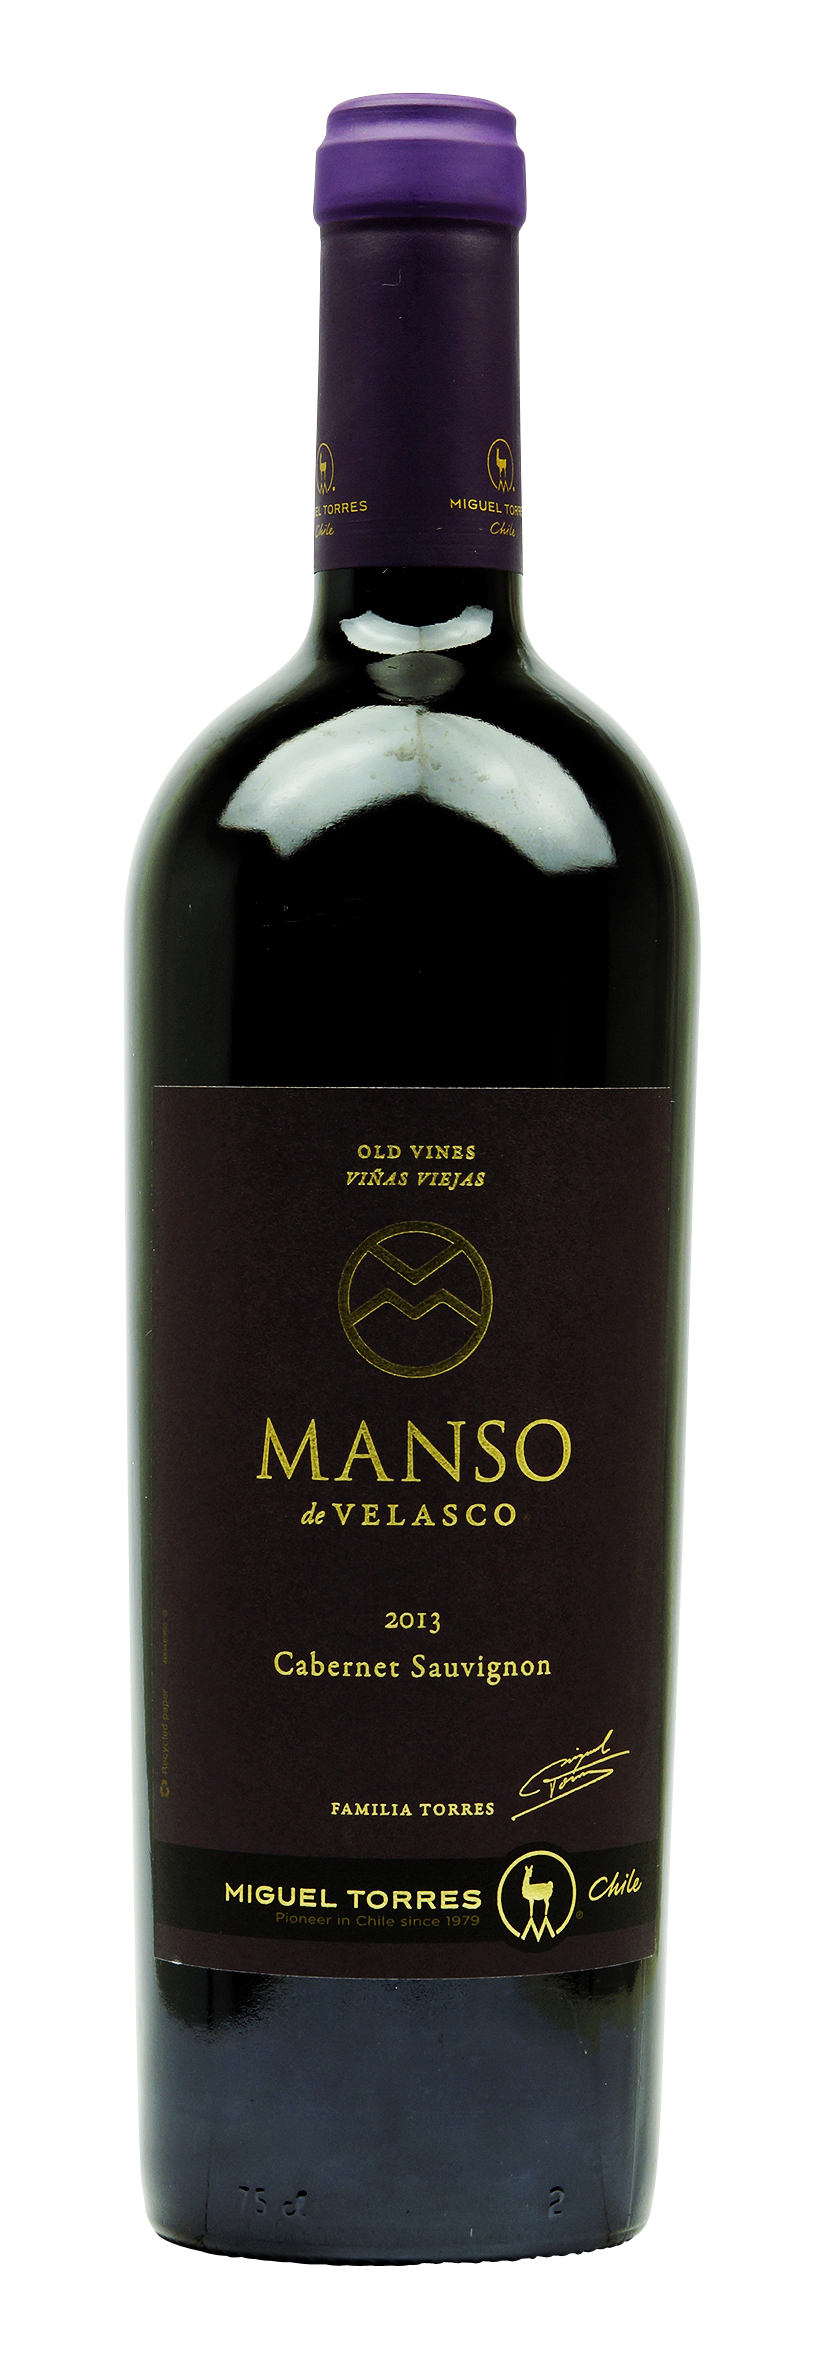 Manso de Velasco Cabernet Sauvignon 2013